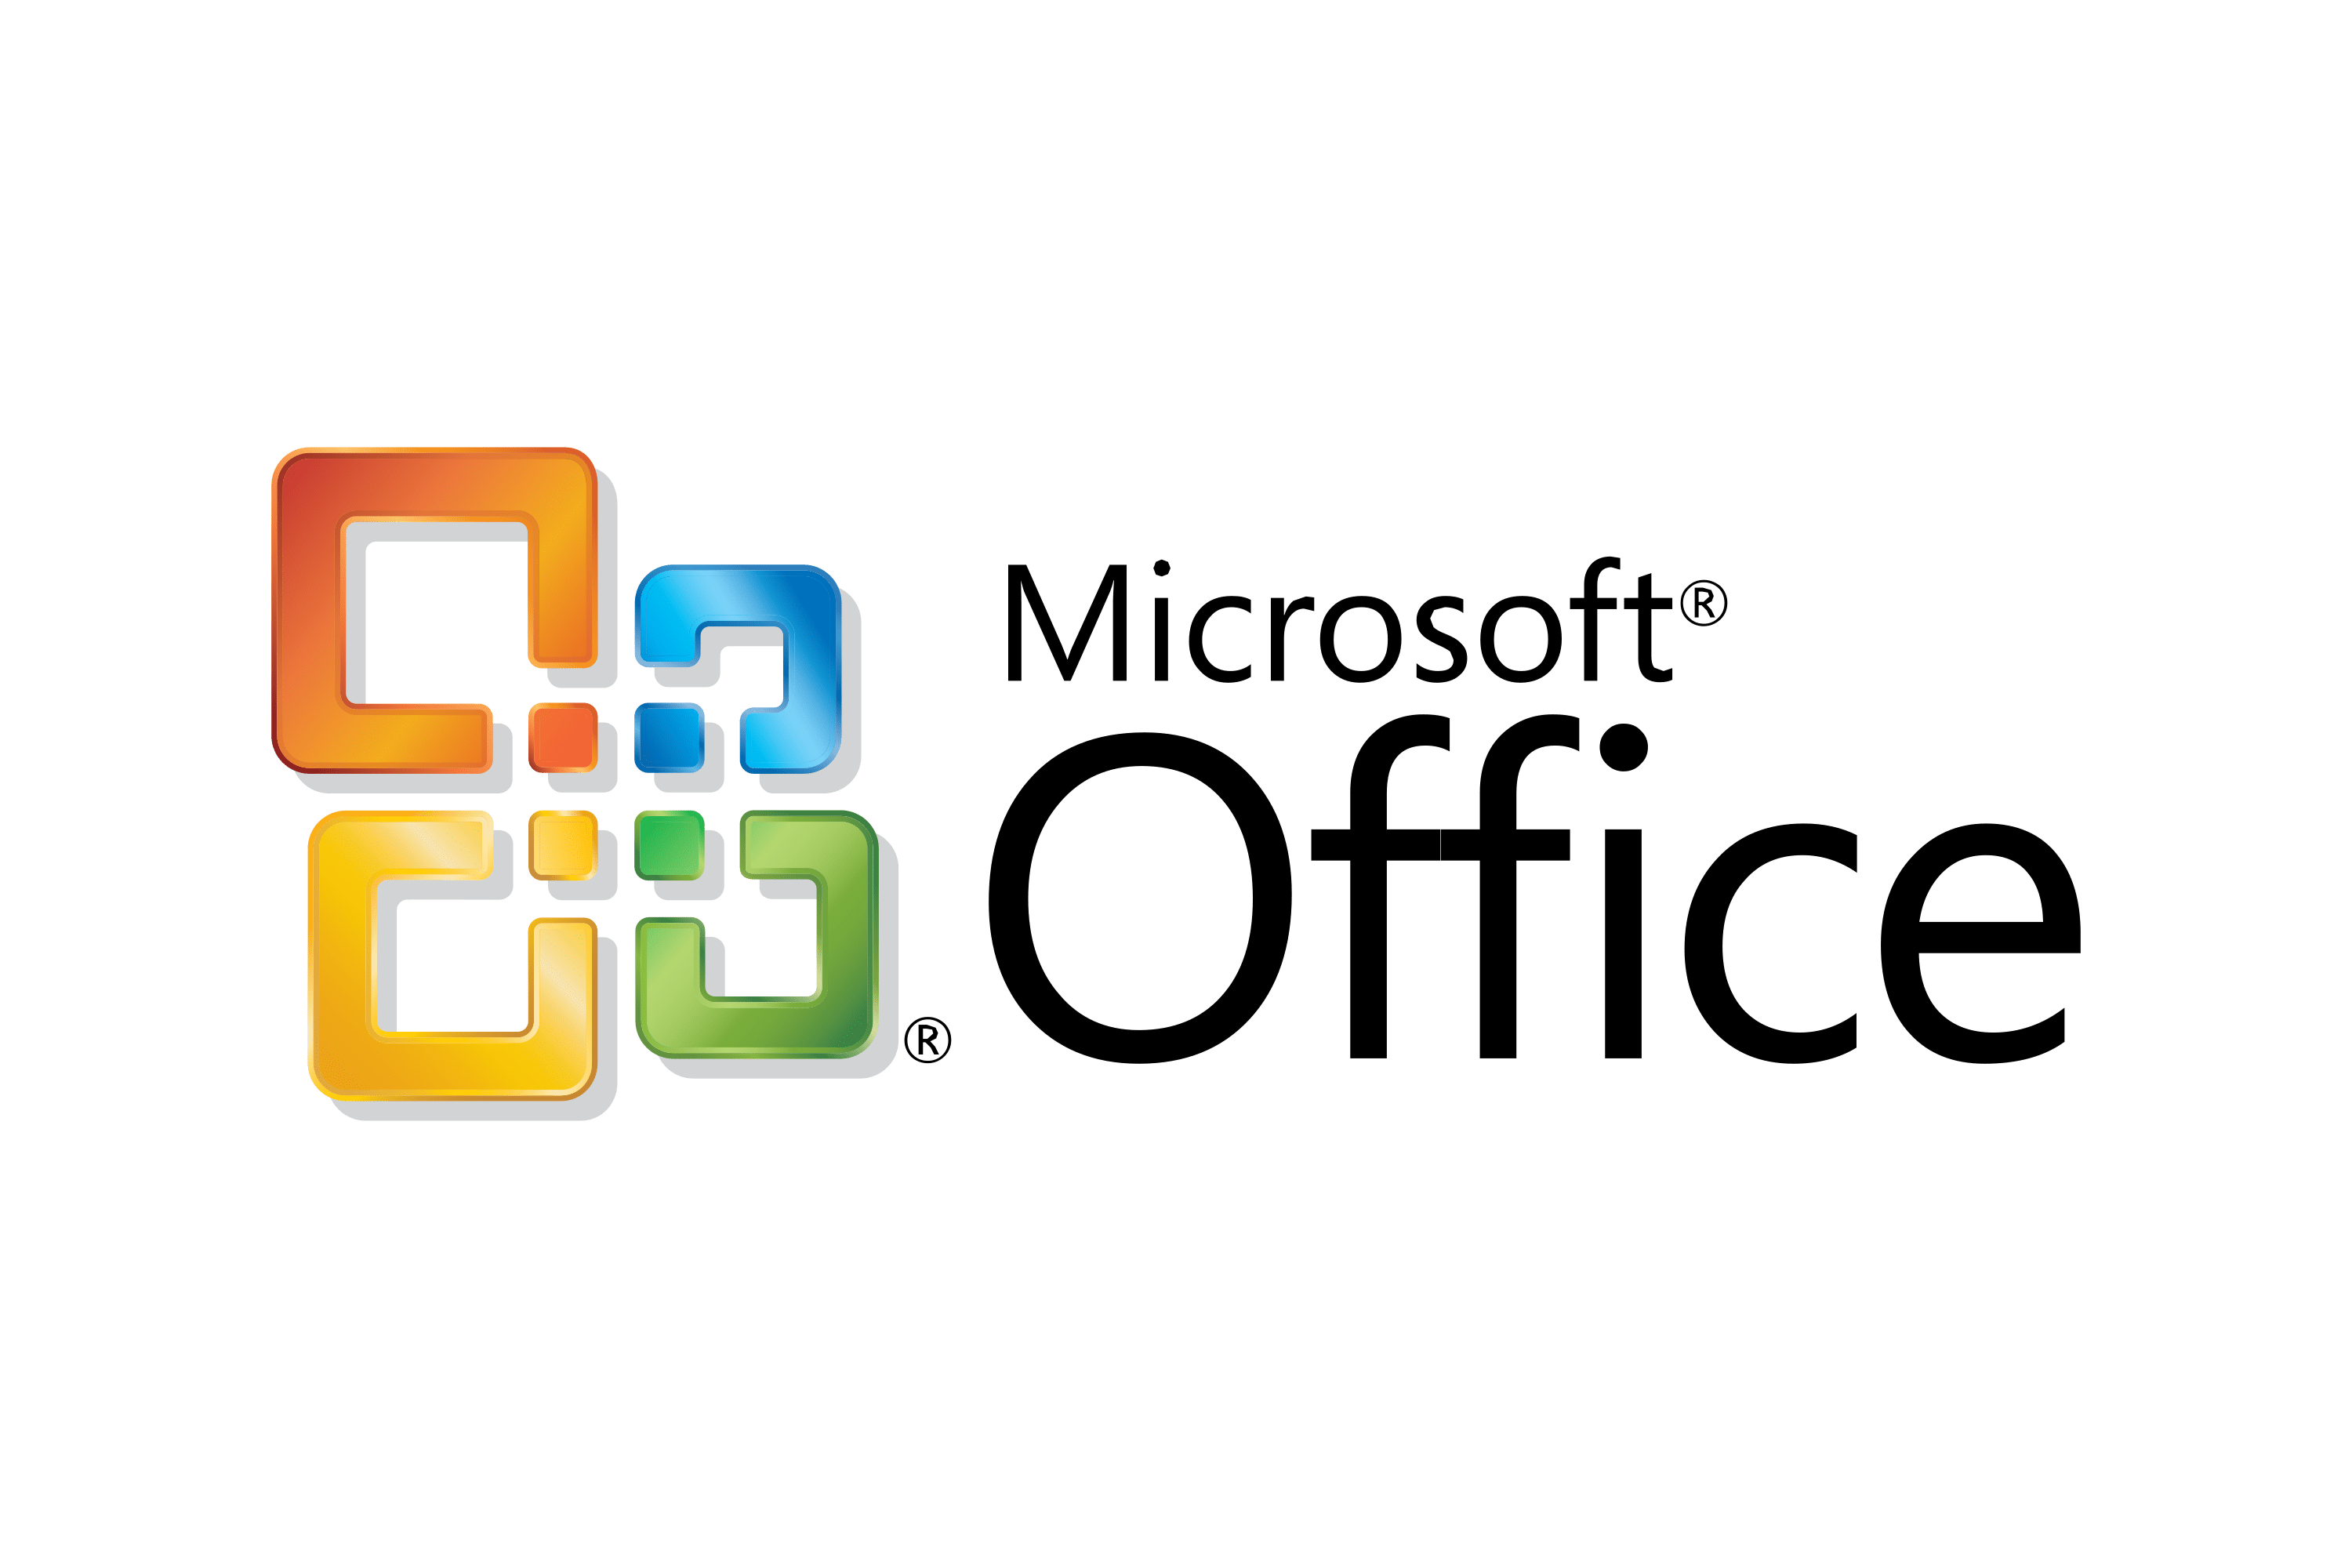 Кроссоф. Microsoft Office. Microsoft Office логотип. Картинки MS Office. Офисные приложения.